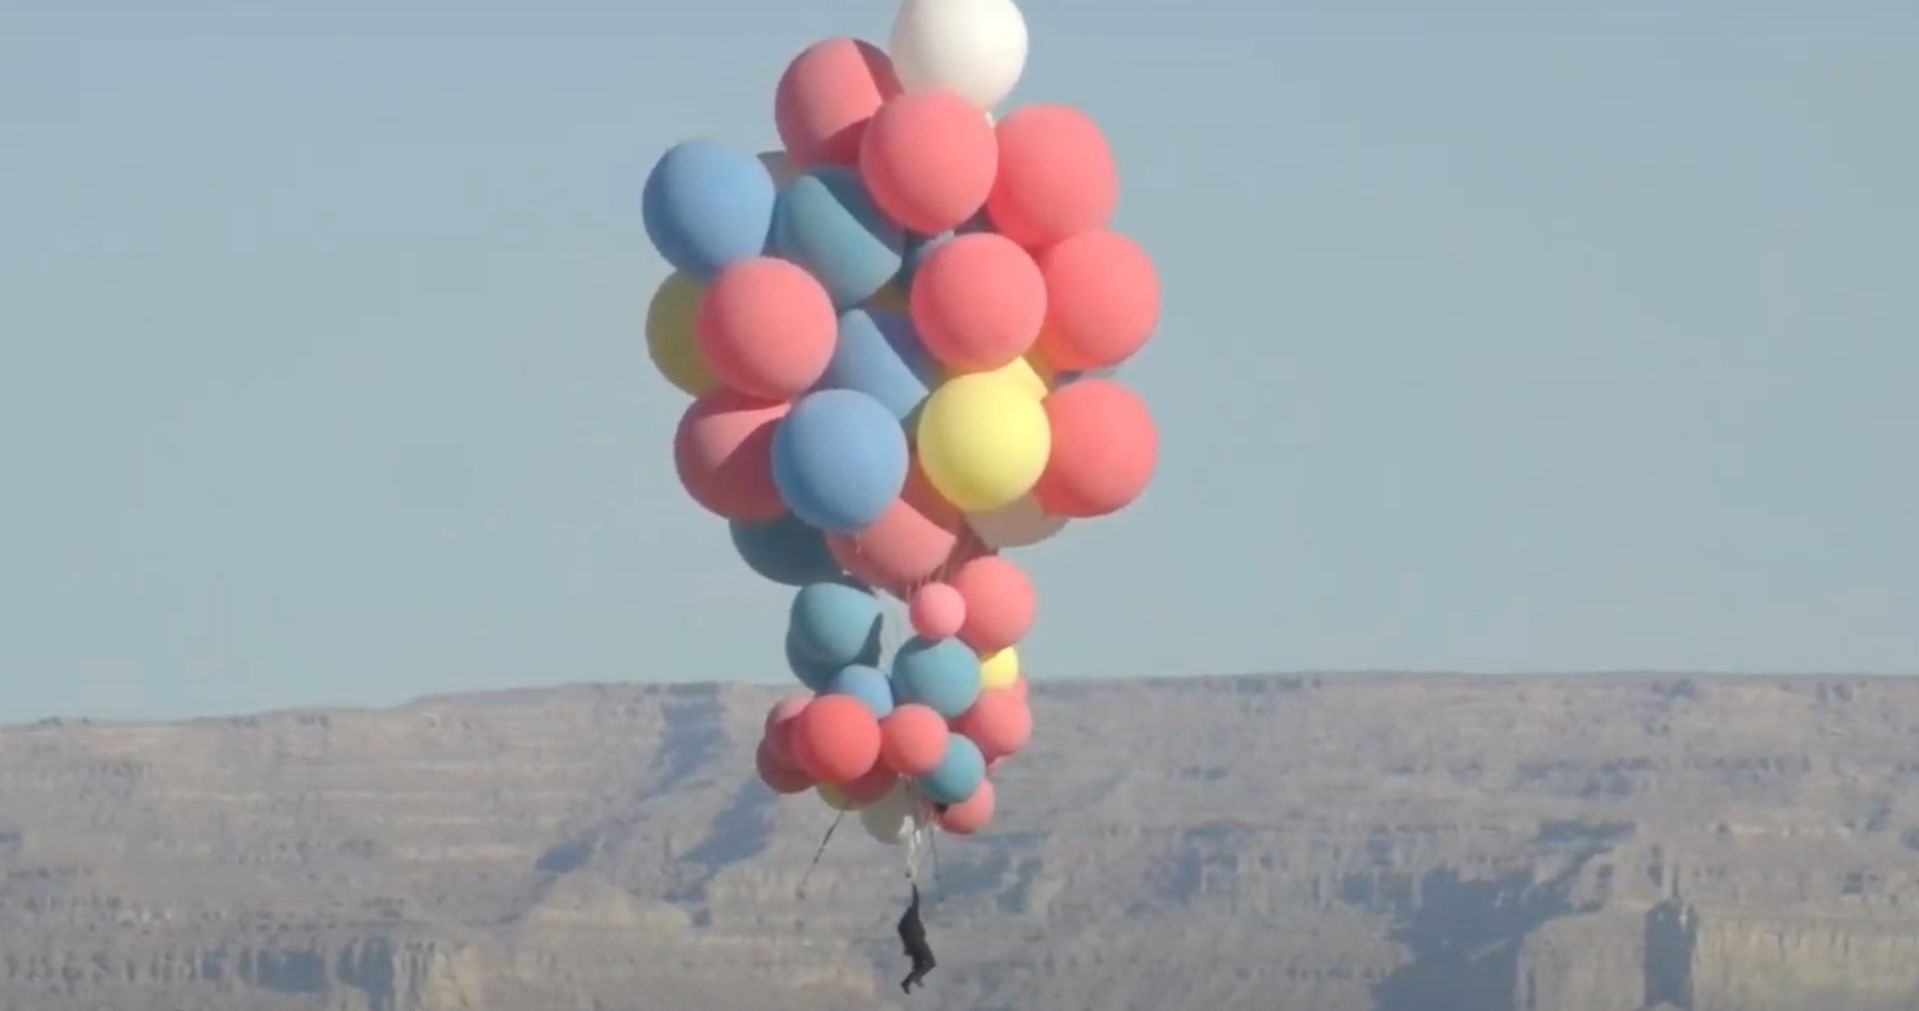 Watch as David Blaine Pulls Off Up-Inspired Flying Balloon Stunt Over Arizona